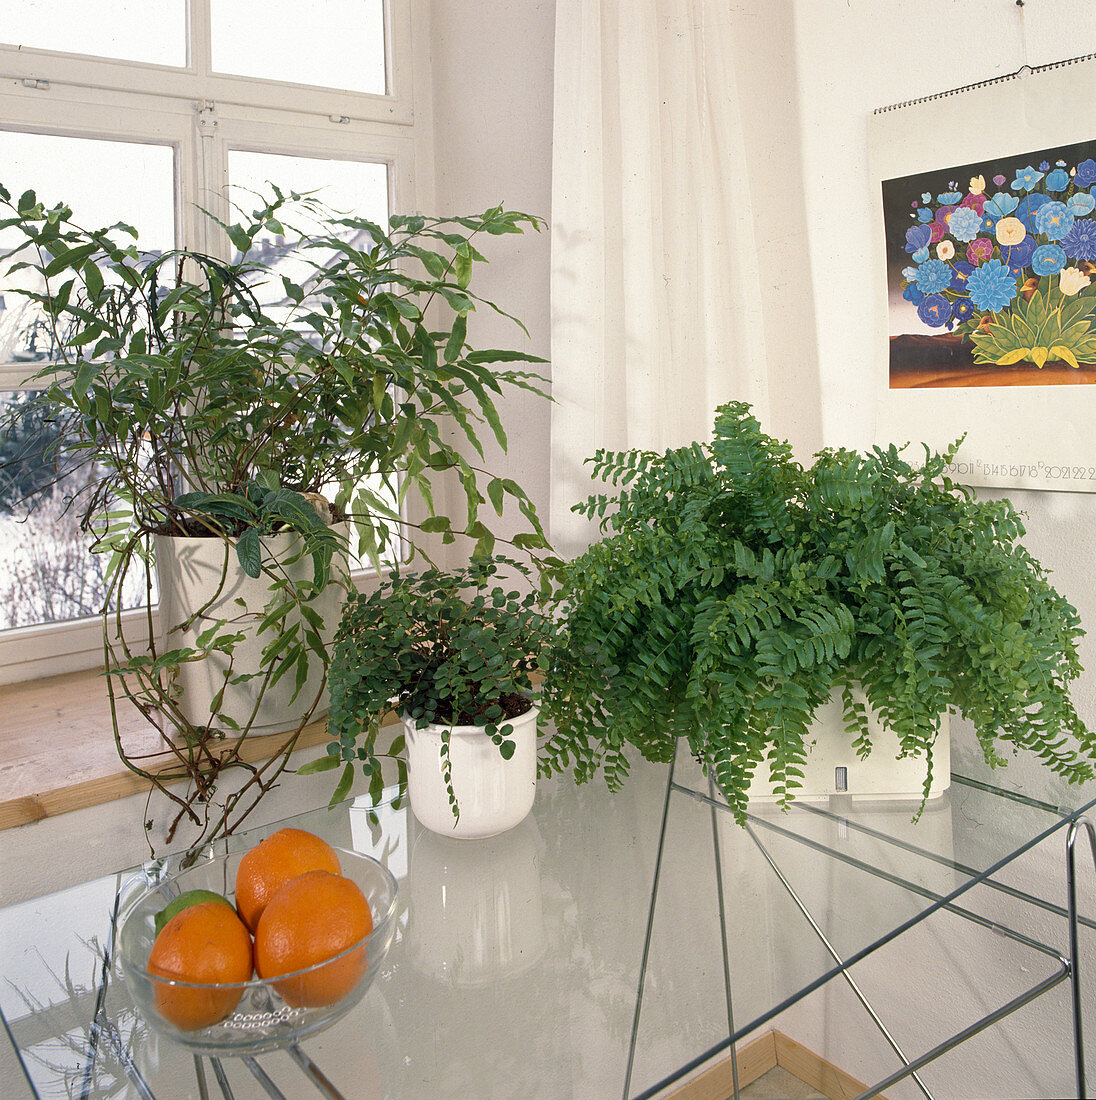 Ferns on a glass table - Polypodium, Pellaea rotundifolia